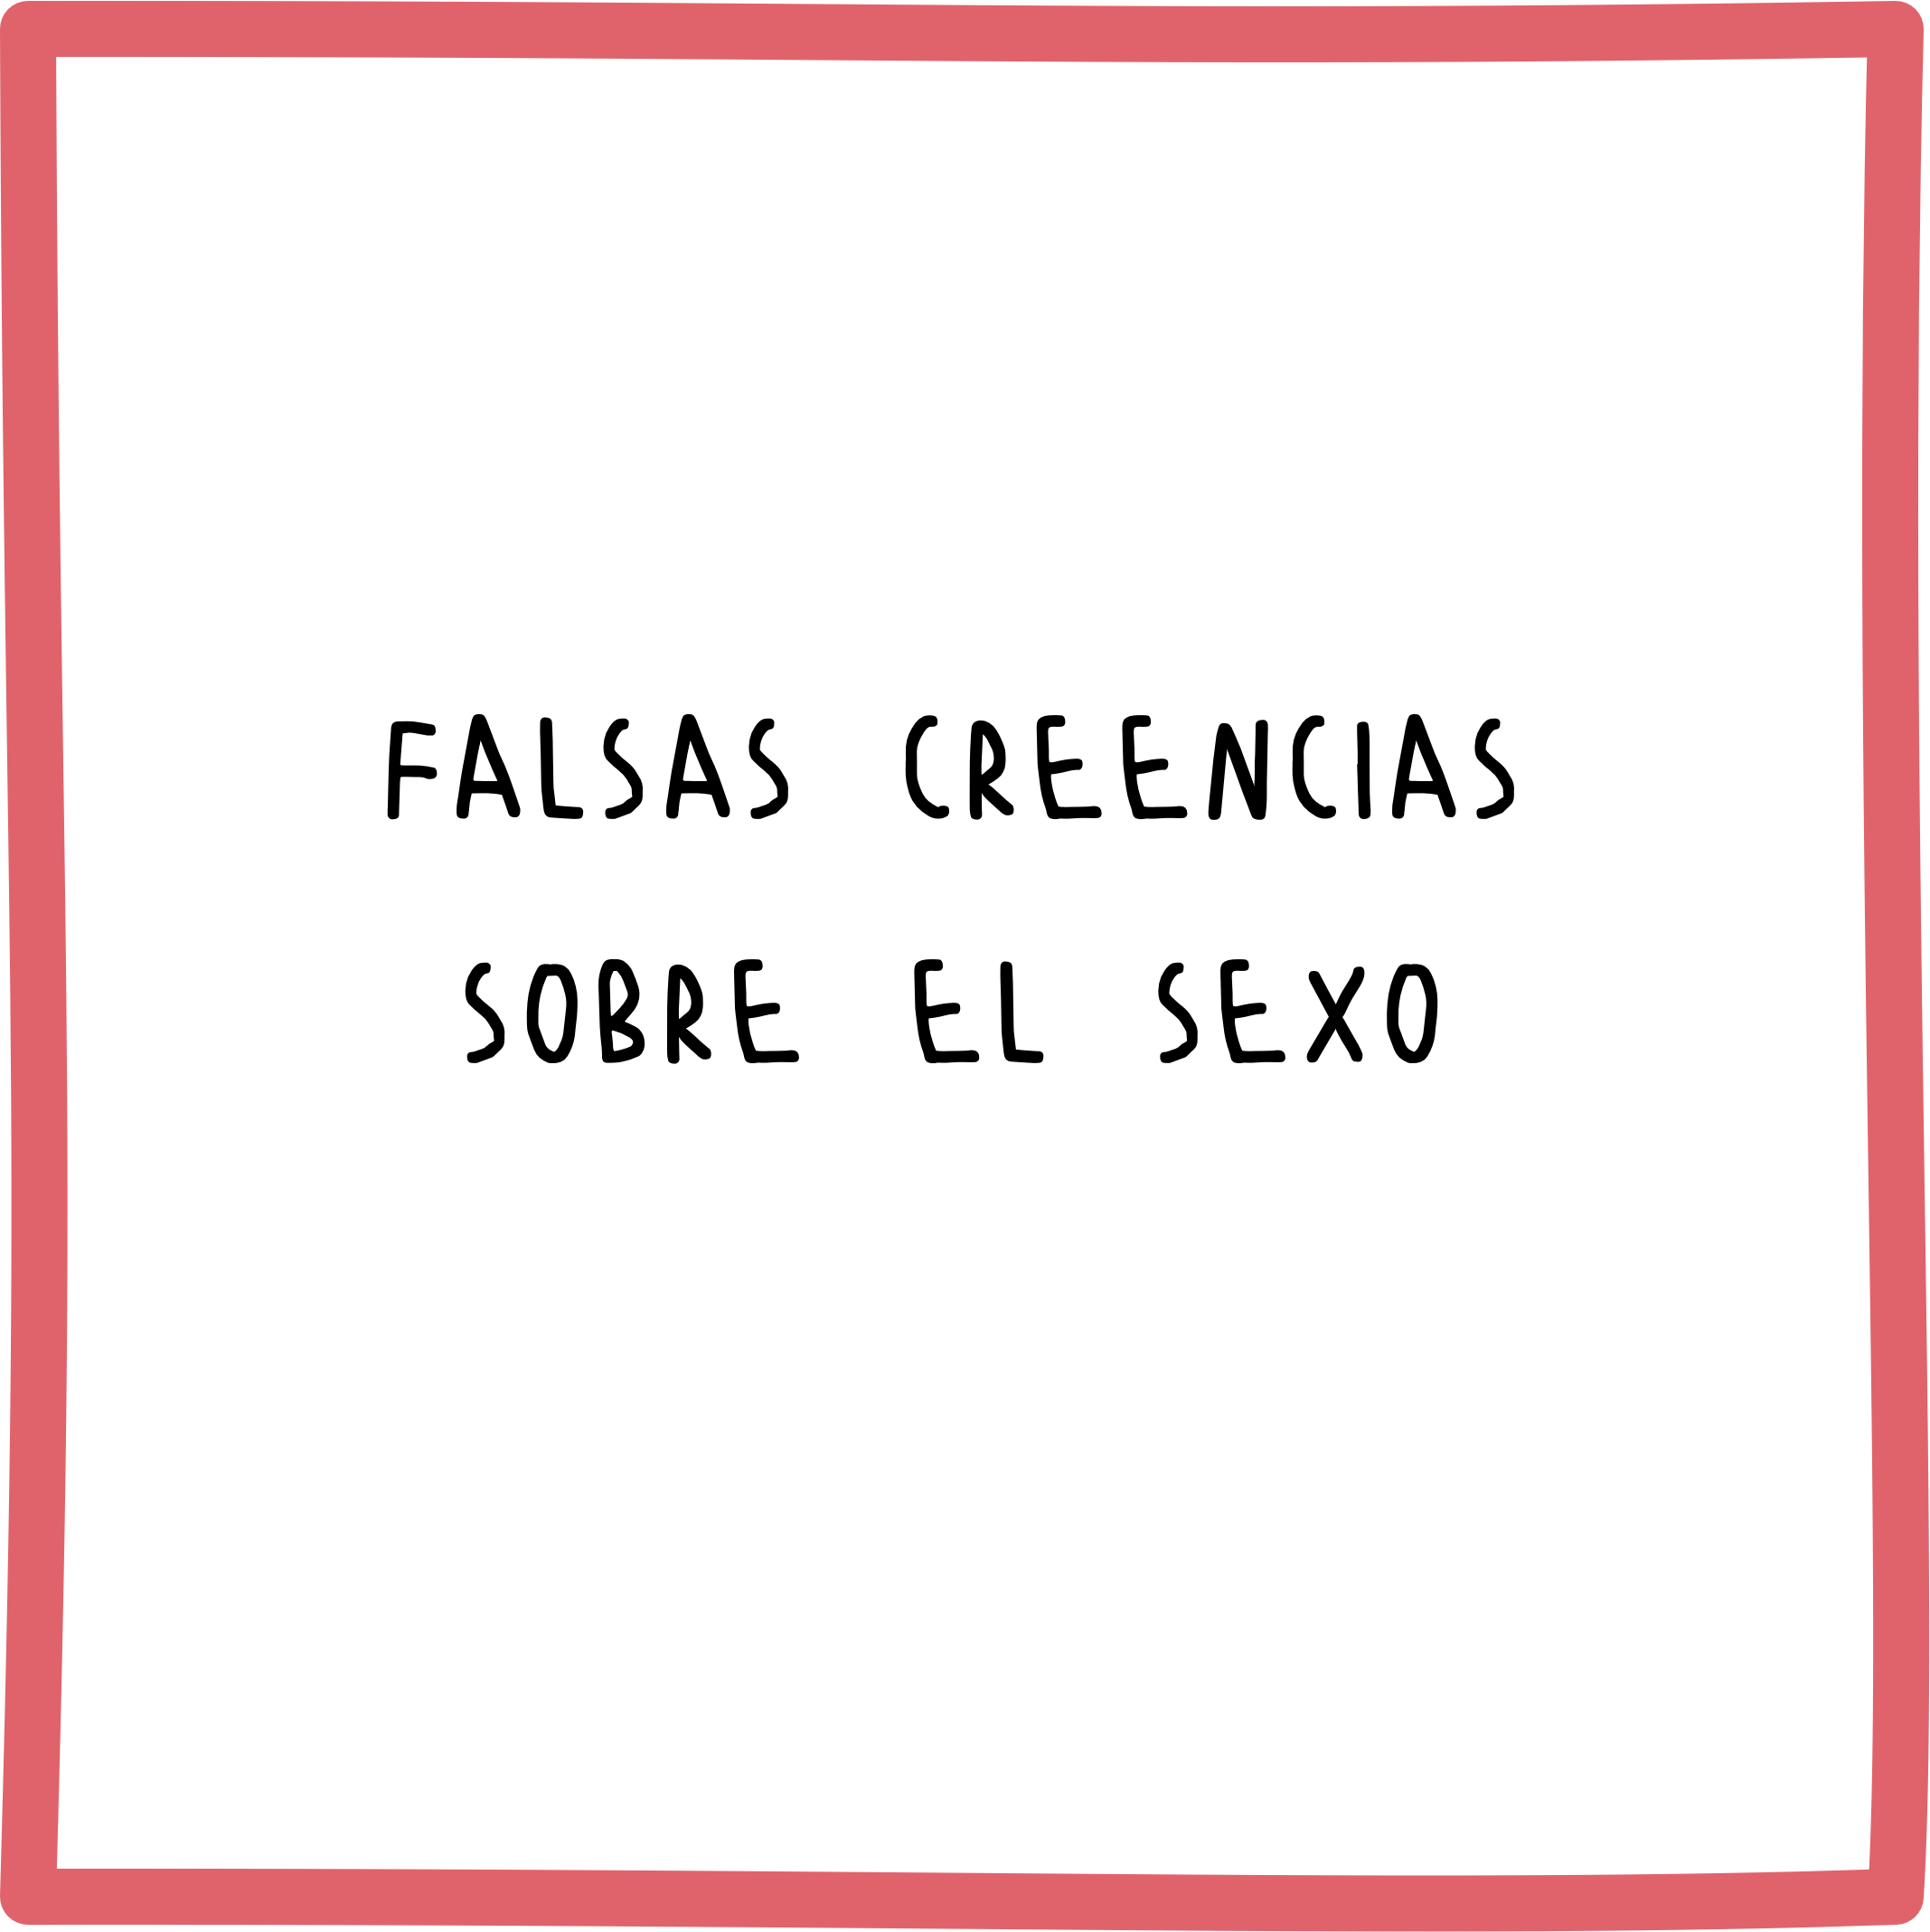 FALSAS CREENCIAS SOBRE EL SEXO